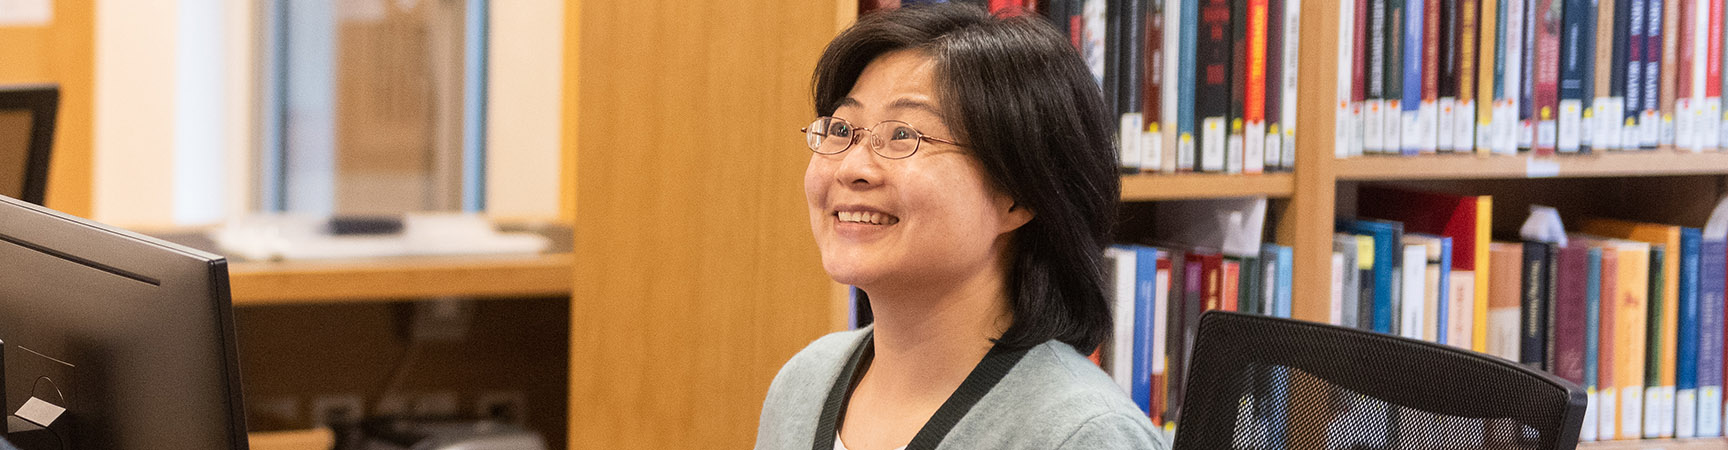 A librarian smiling at the camera